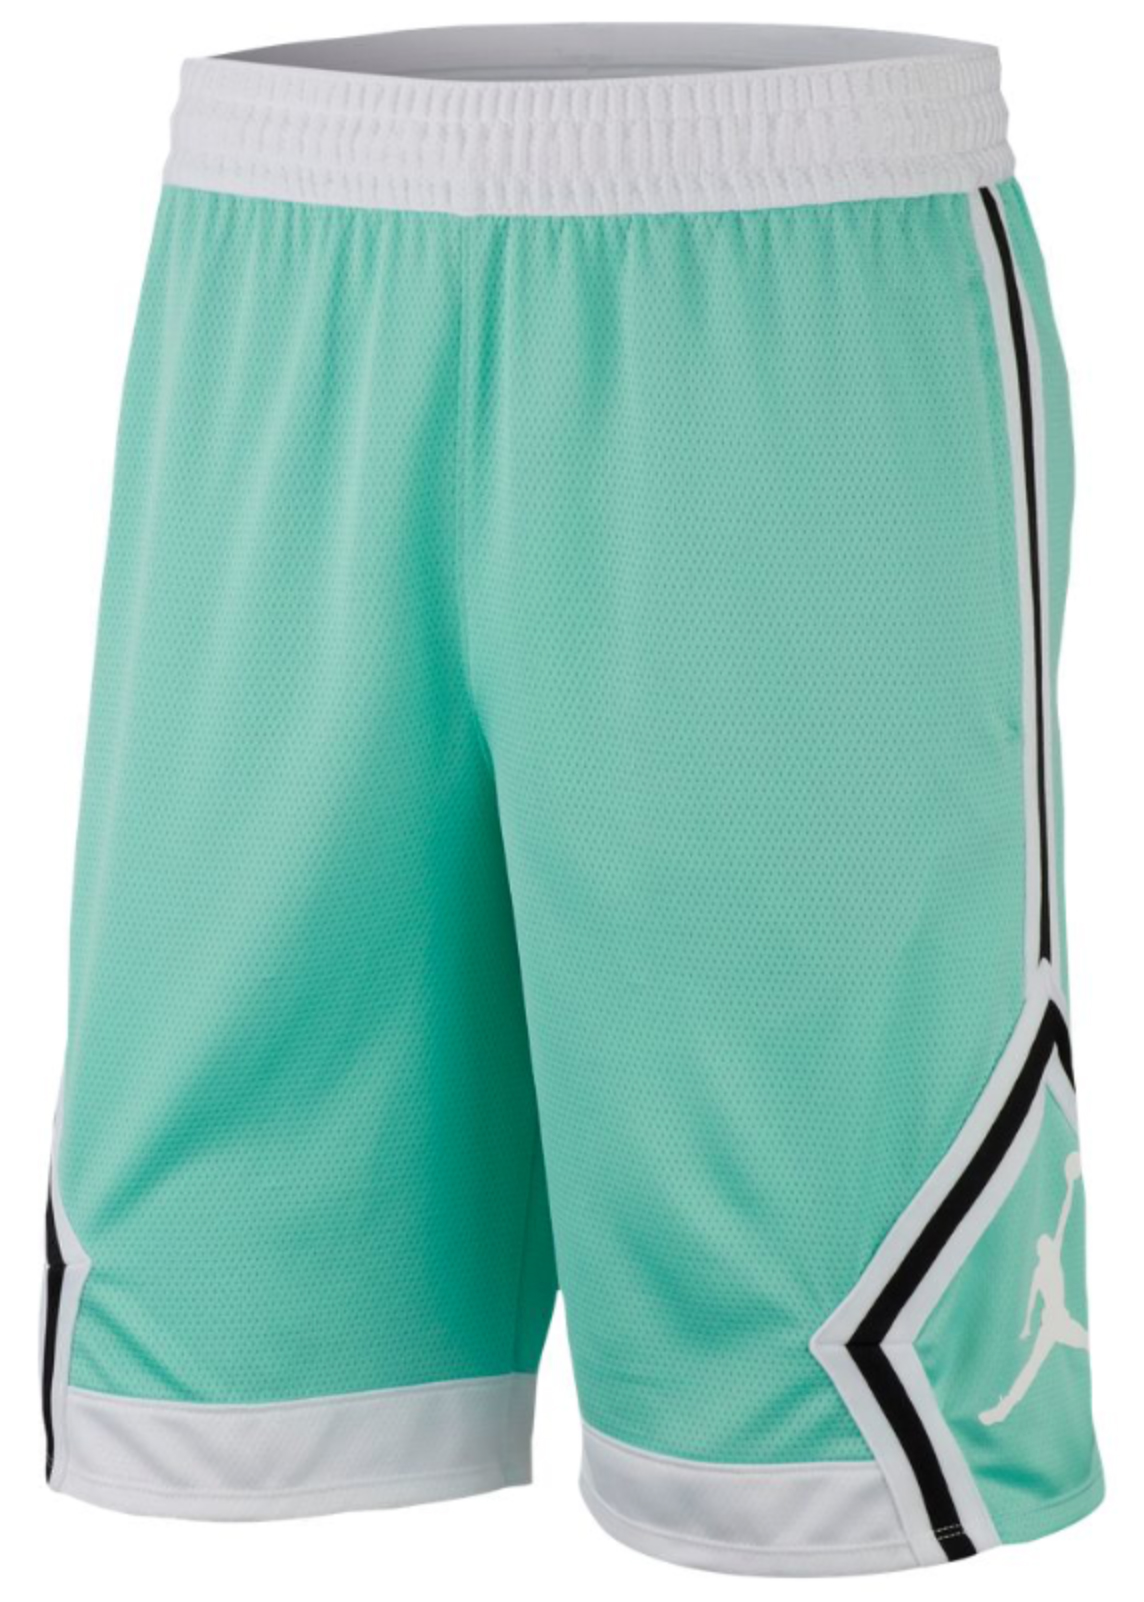 Air Jordan 11 Low Easter Emerald Shorts 